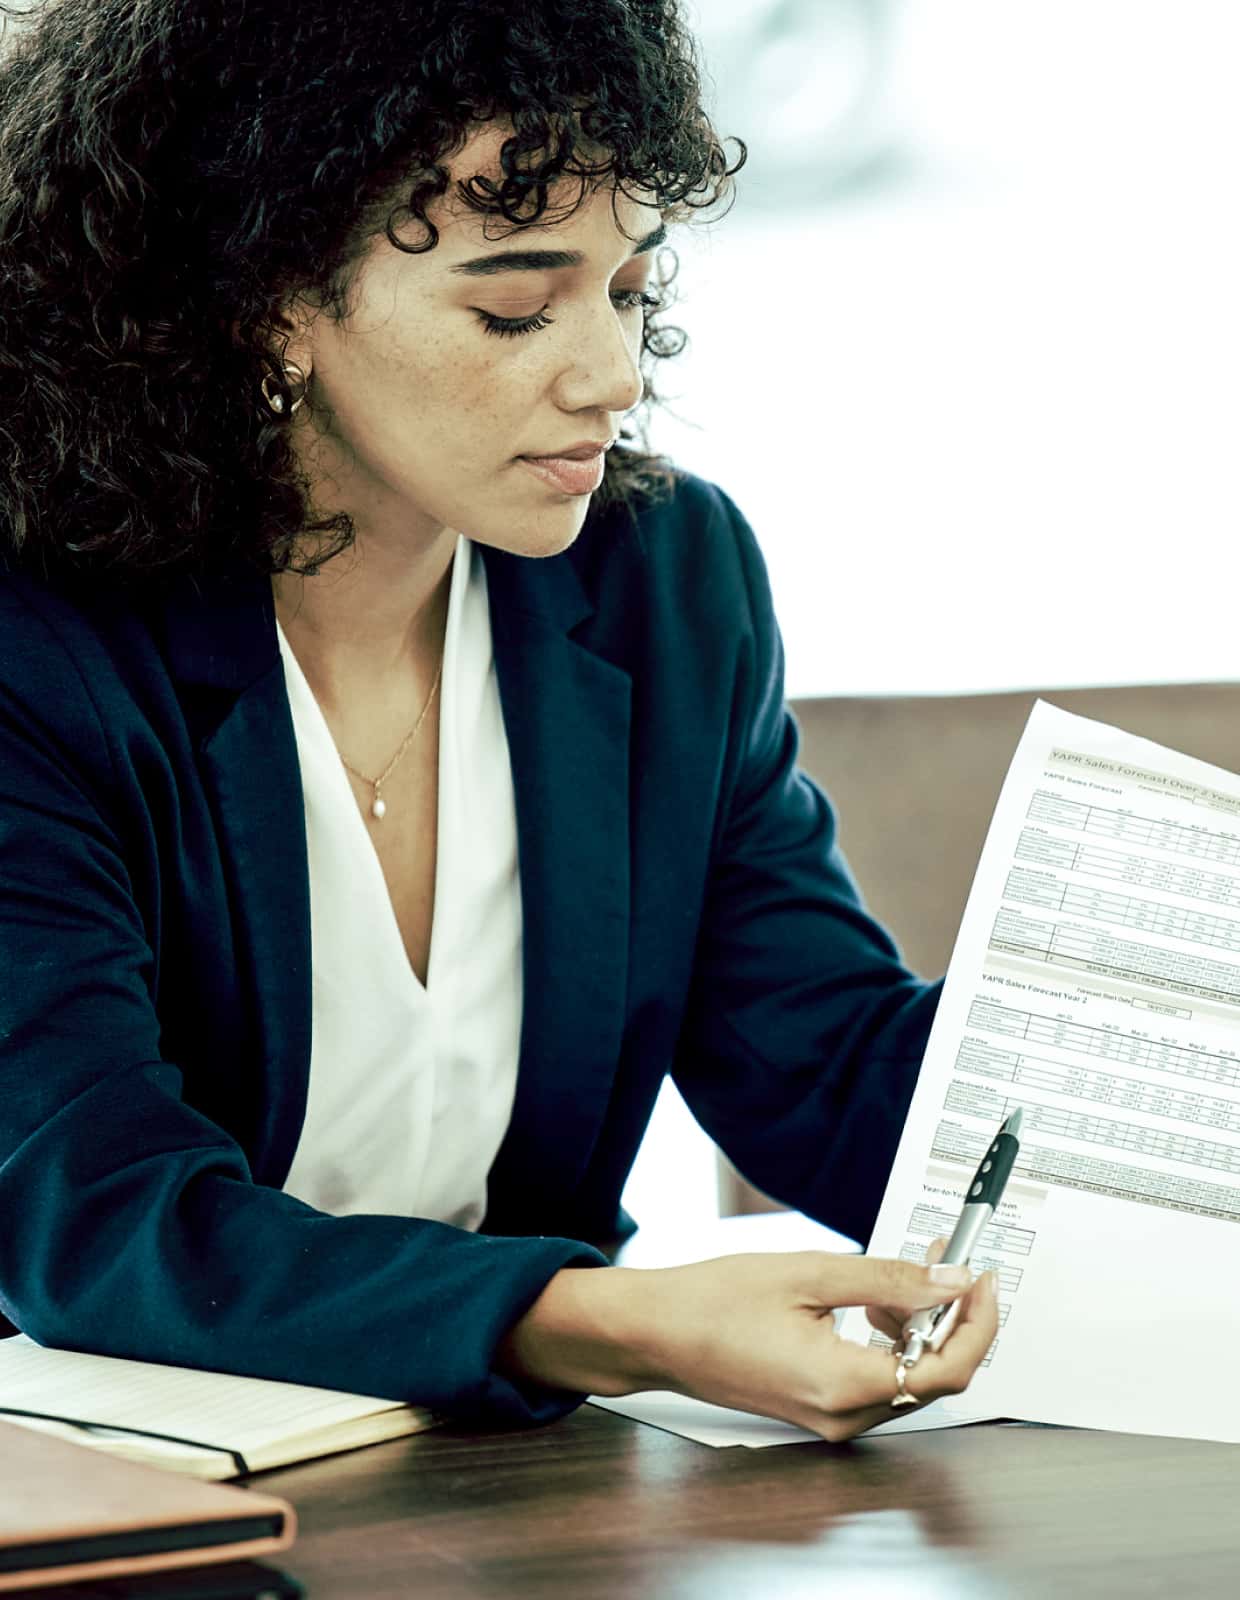 A woman in a blazer reviews paperwork.